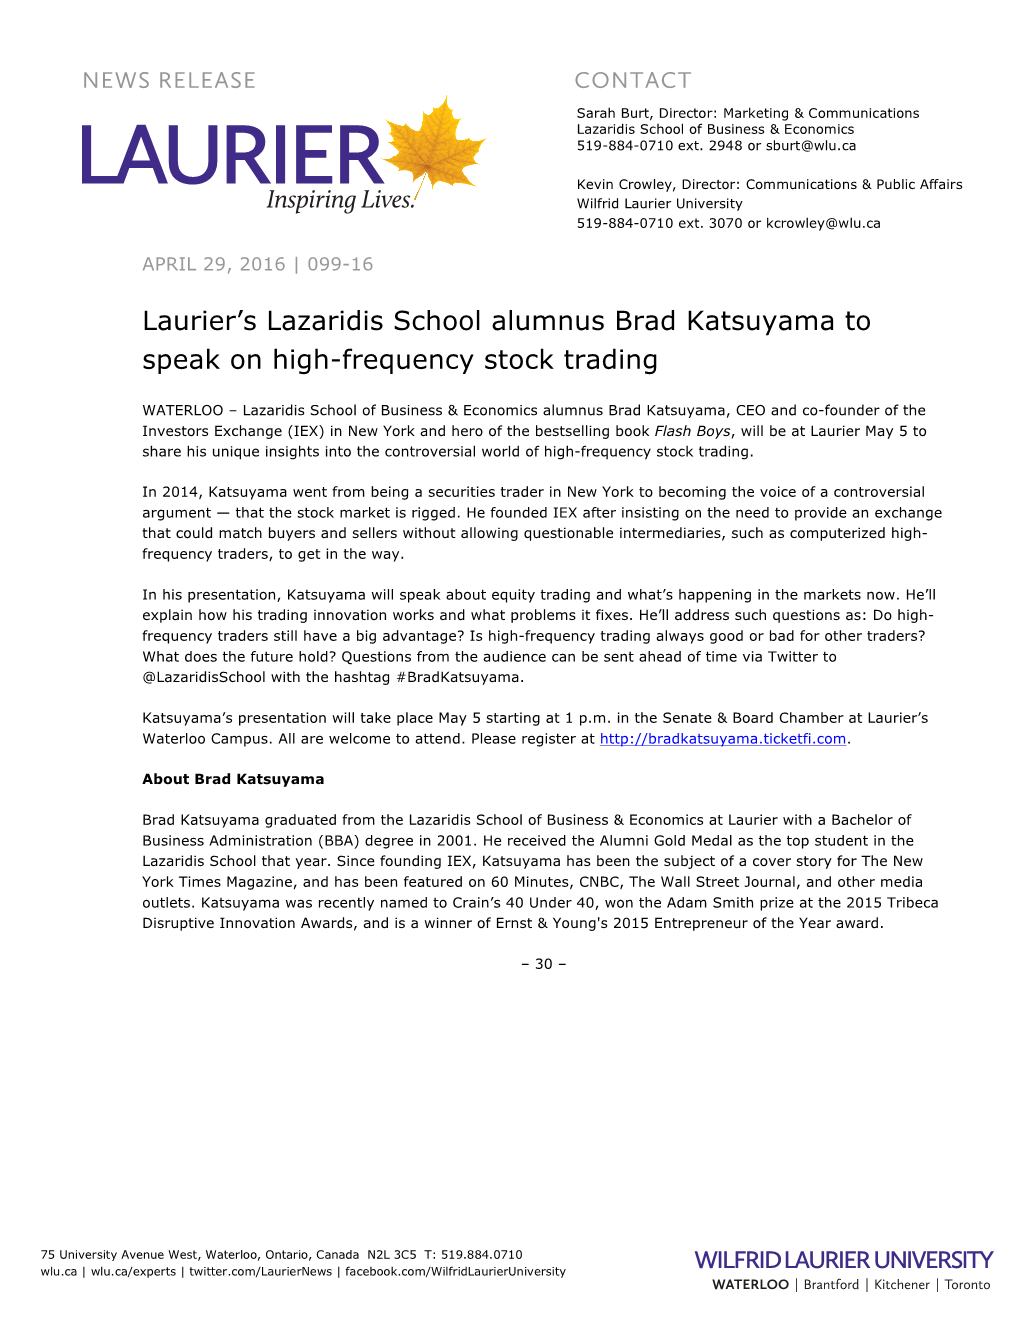 Laurier's Lazaridis School Alumnus Brad Katsuyama To